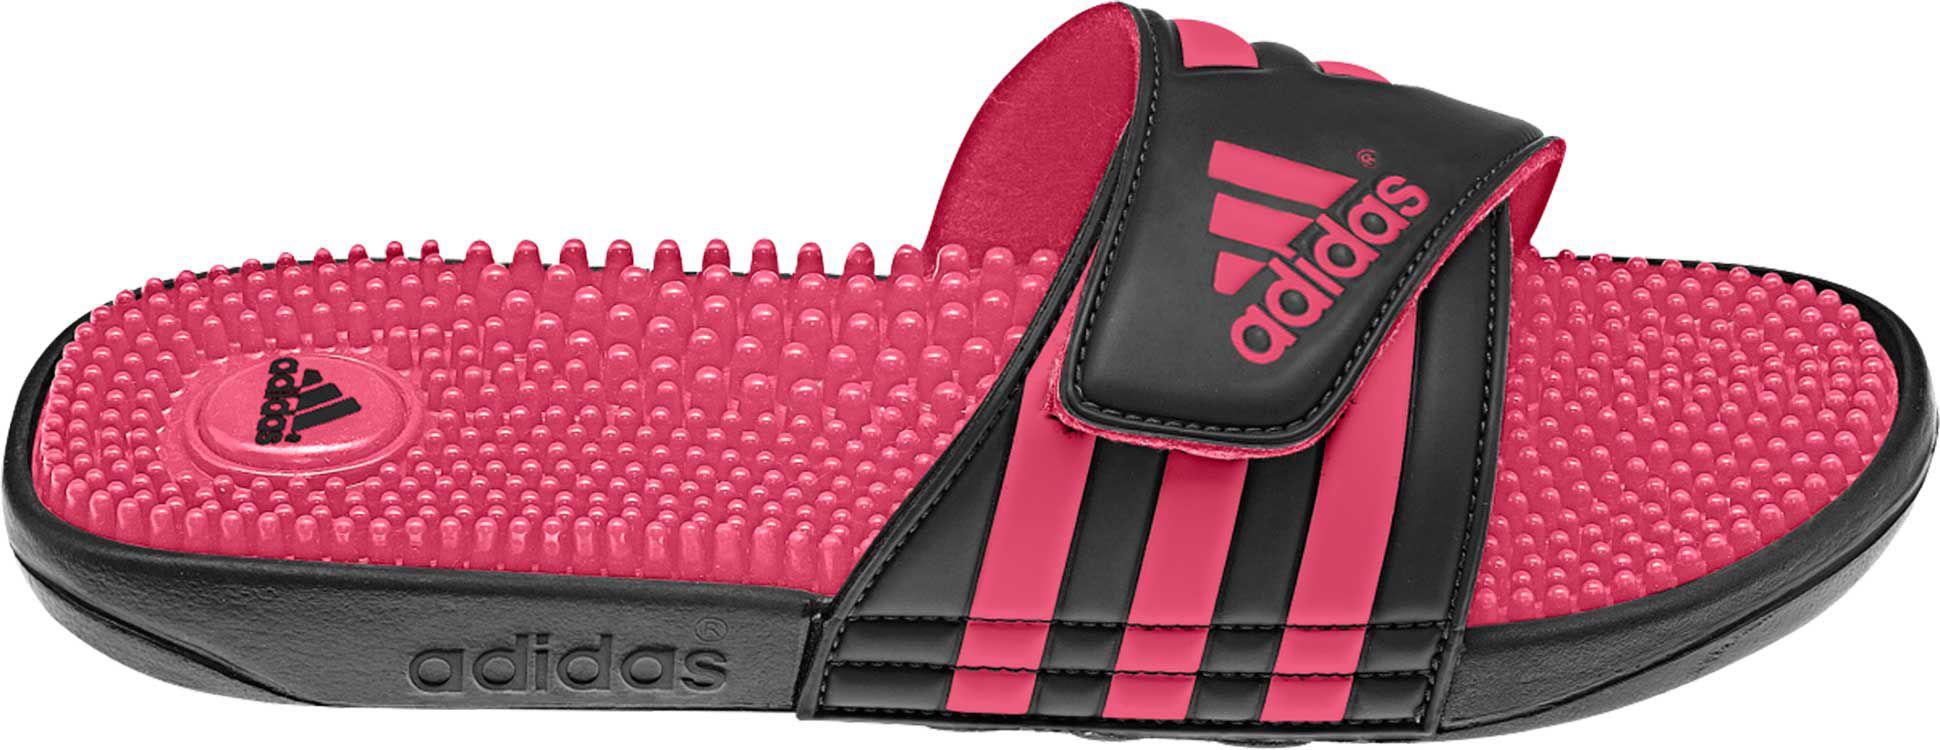 adidas Adissage Slides in Black/Pink (Pink) - Lyst